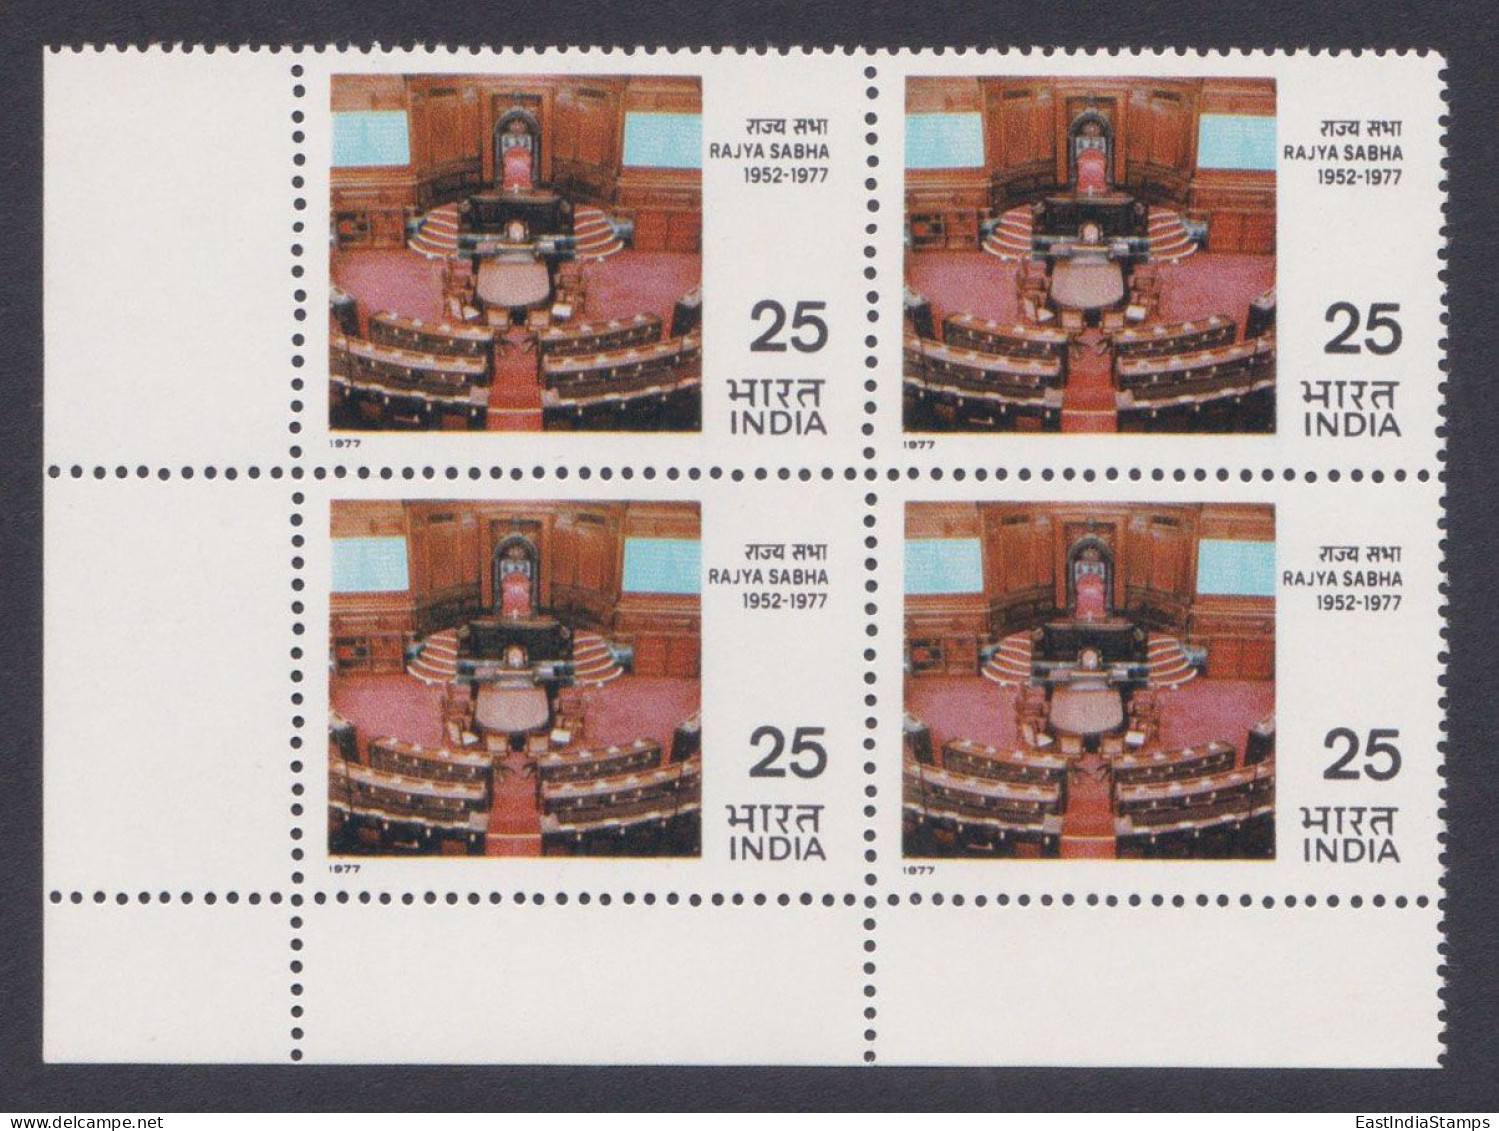 Inde India 1977 MNH Rajya Sabha, Parliament, Upper House, Legislature, Legislative Assembly, Democracy, Block - Unused Stamps